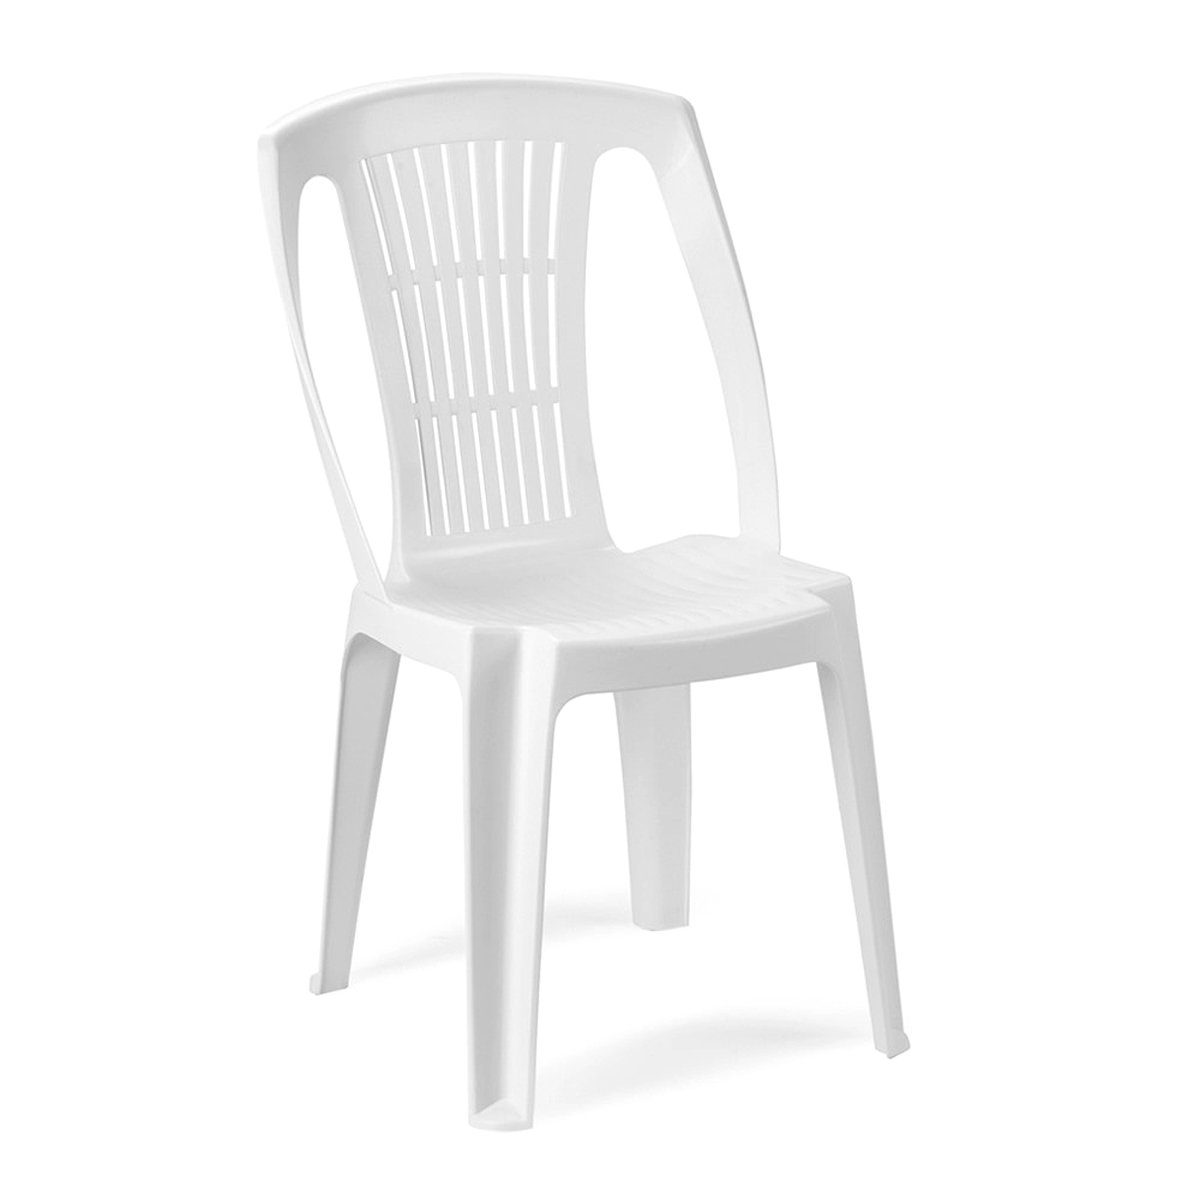 Mojawo Armlehnstuhl Stück 2 Stapelstuhl Kunststoff Weiß